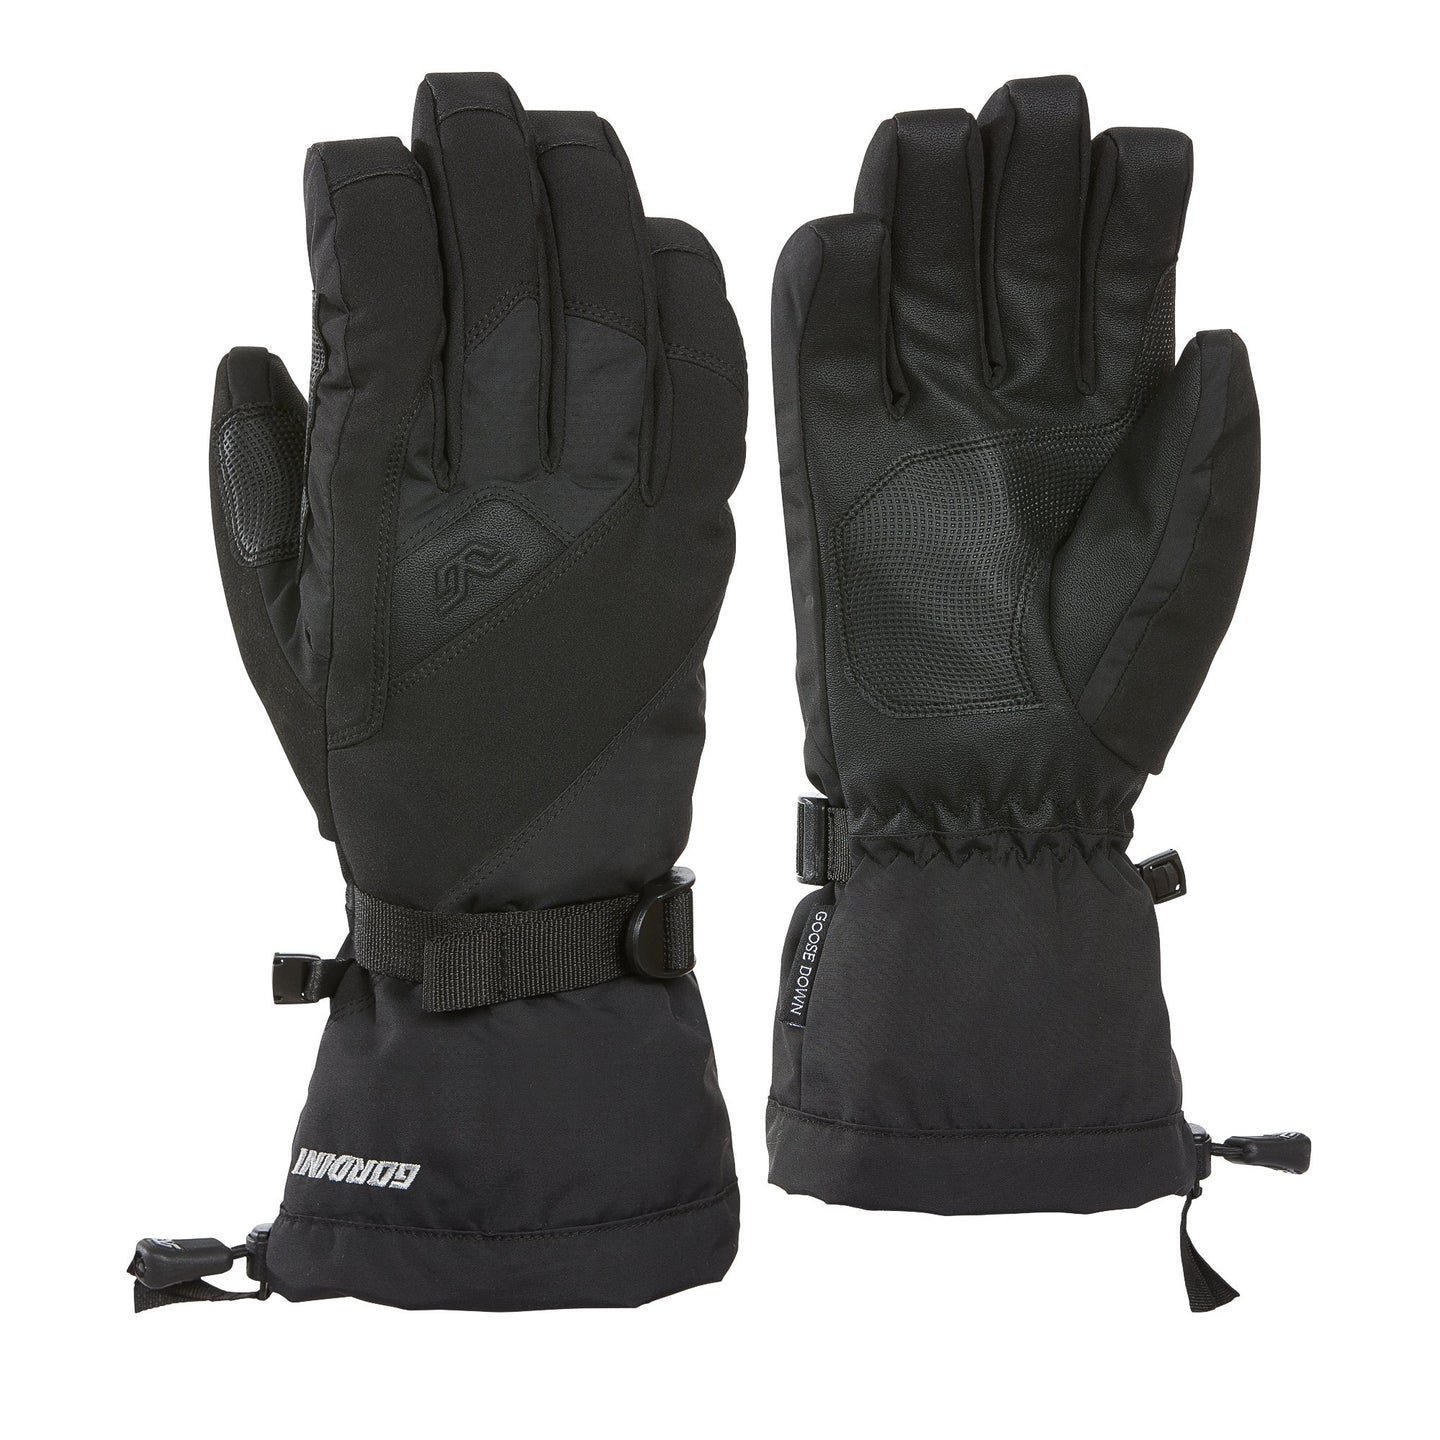 Aquabloc Down Gauntlet IV Gloves - Women